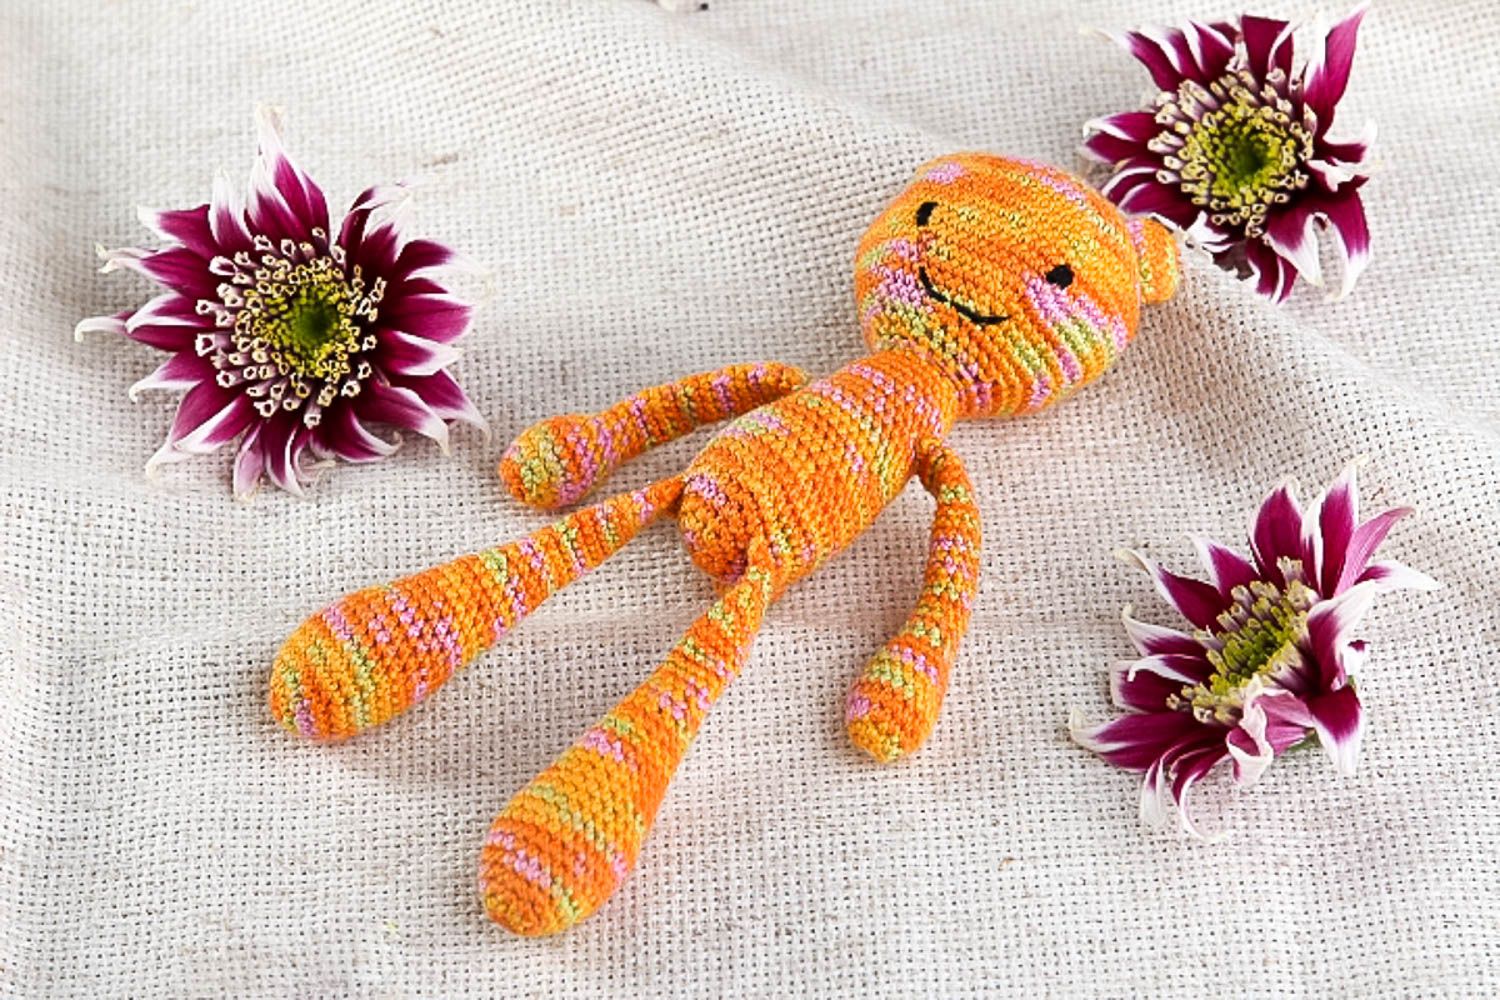 Handmade crocheted soft toy for babies nursery decor ideas stuffed baby toy photo 1